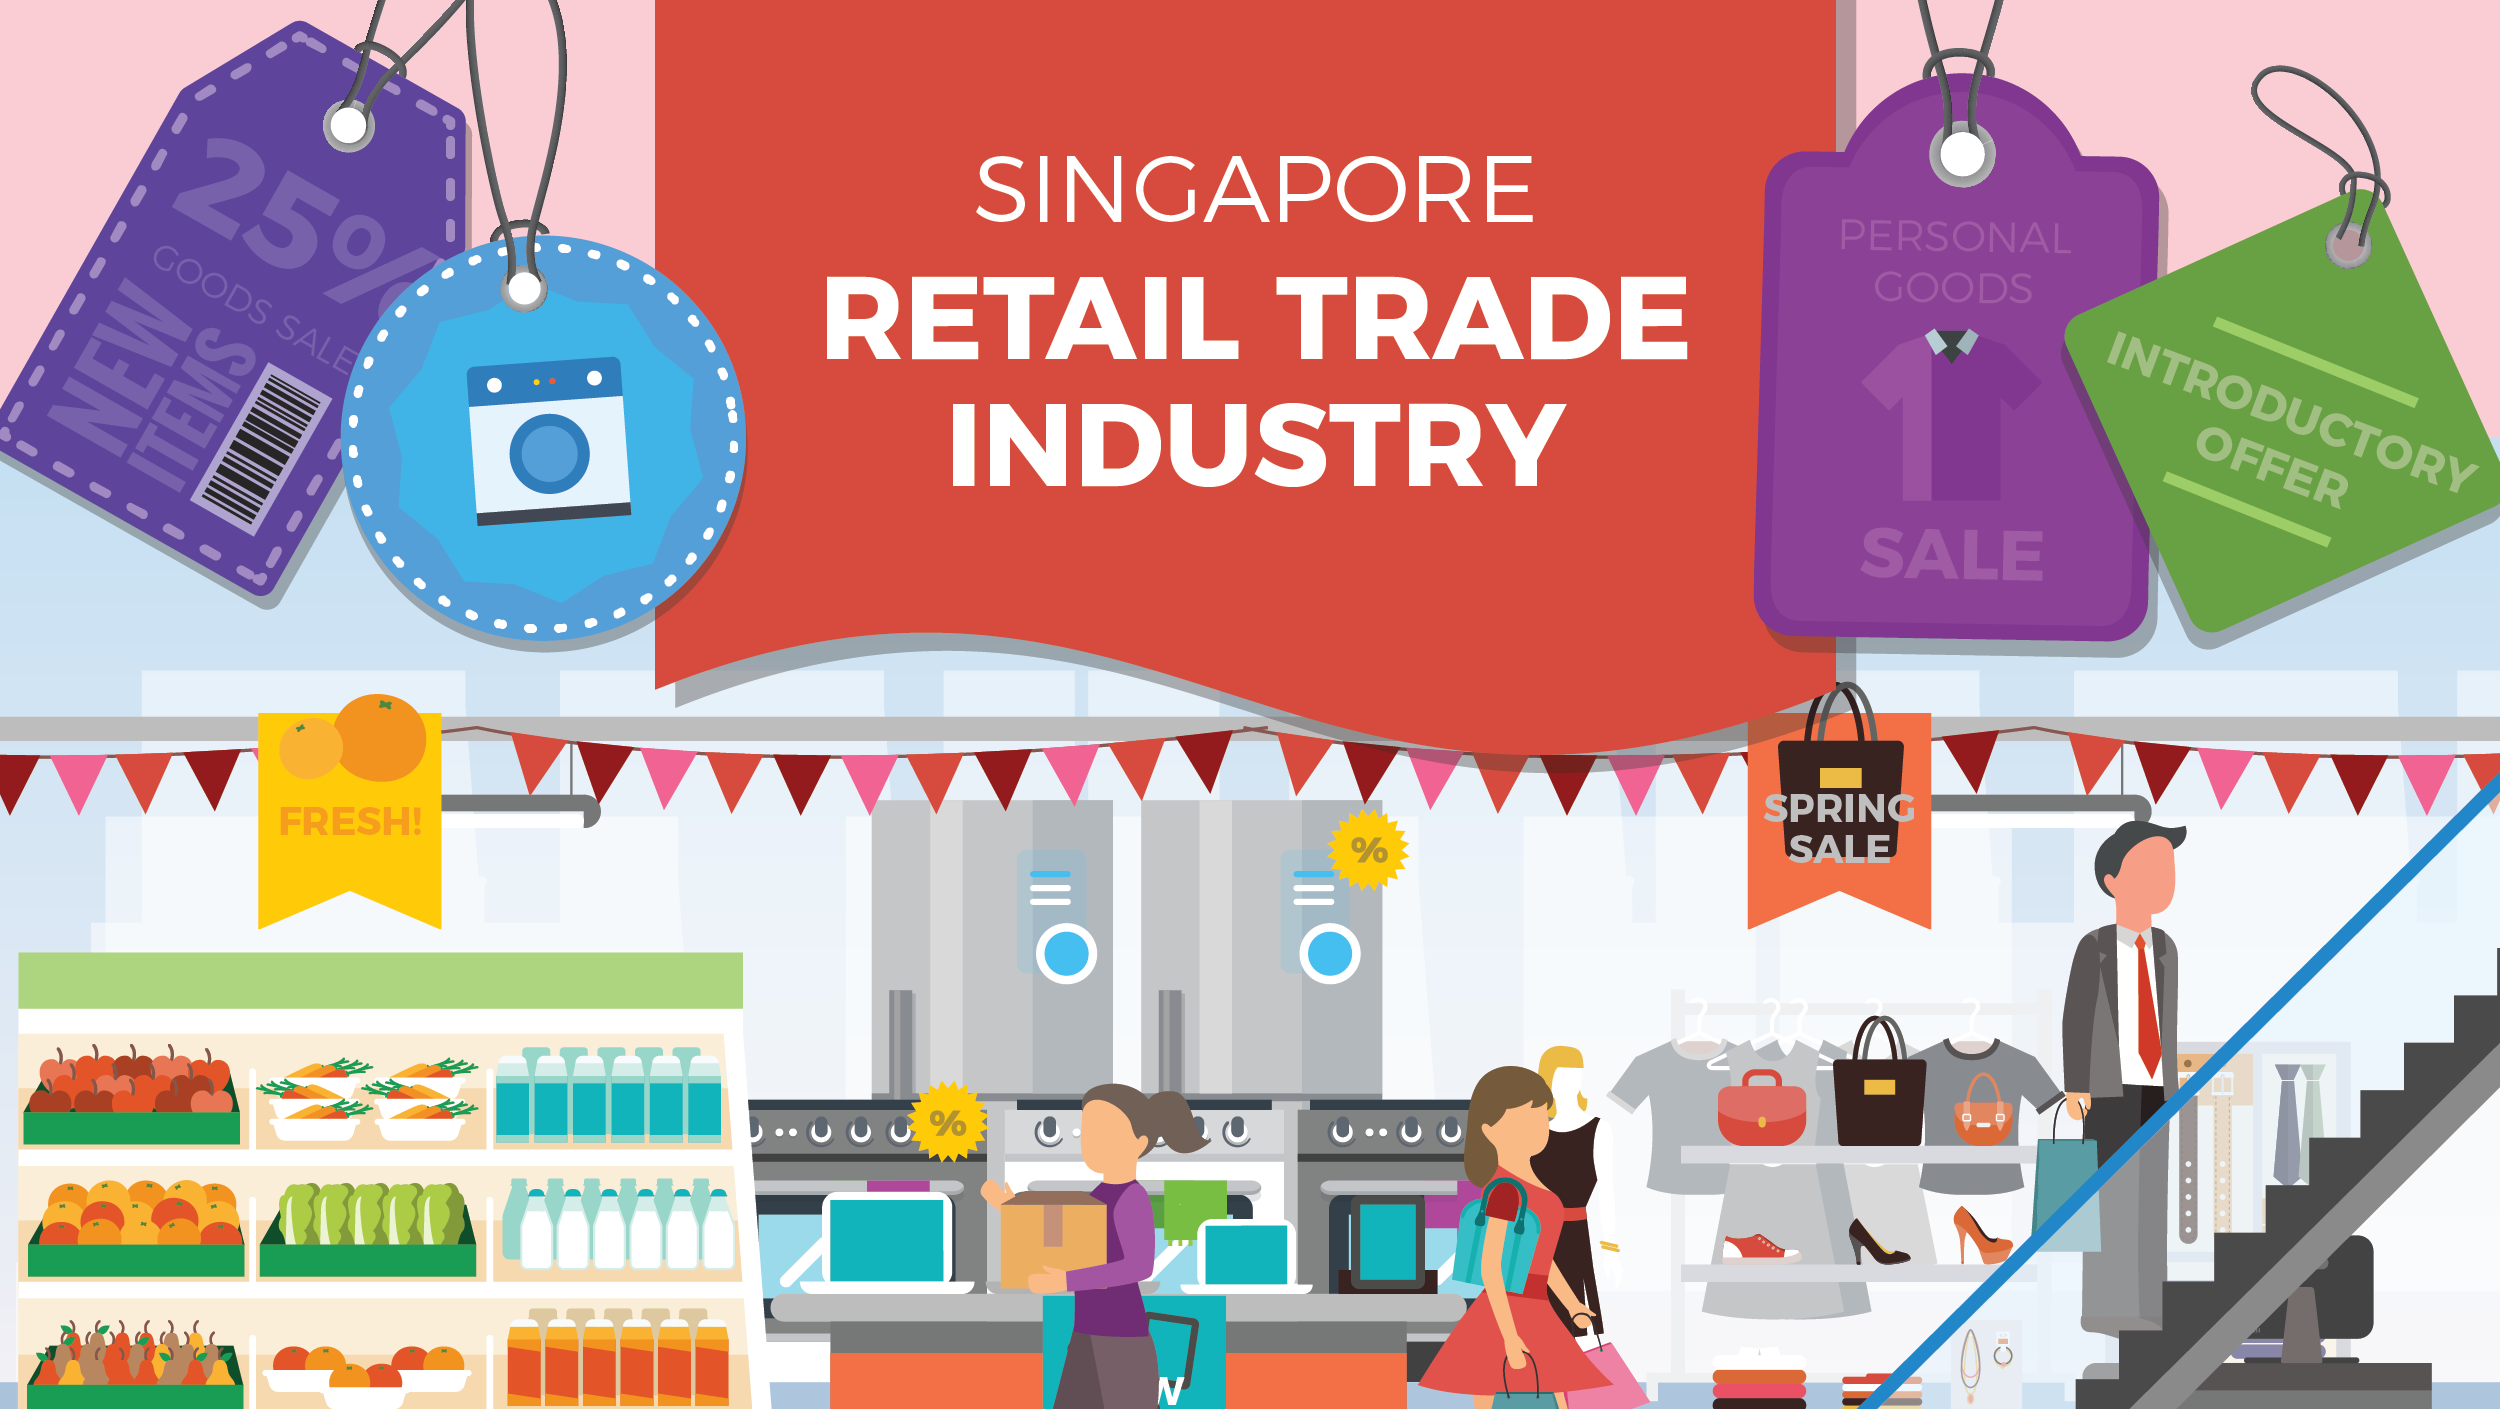 Singapore Retail Trade Industry 2021